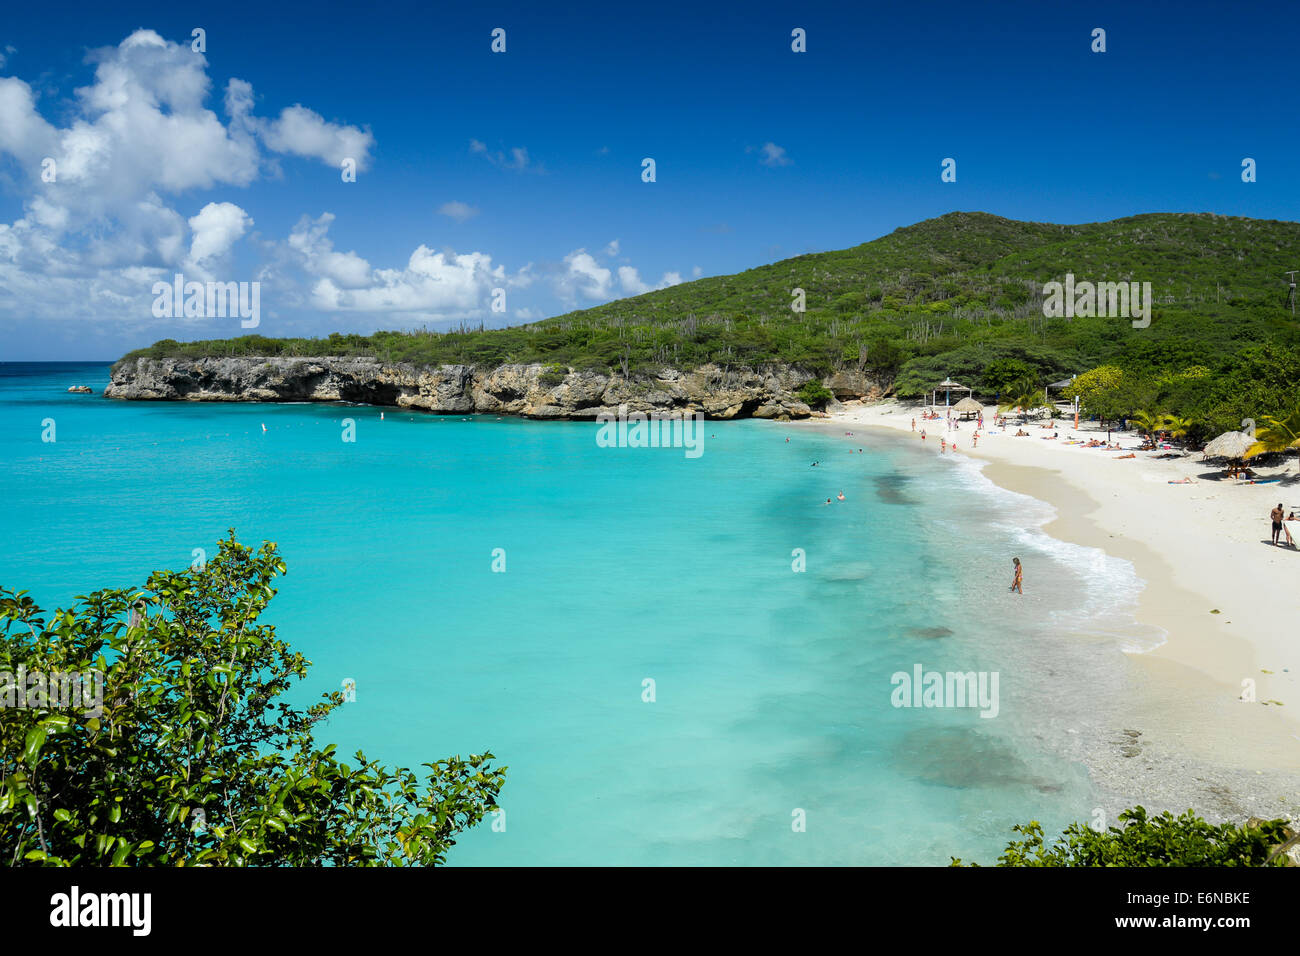 The caribbean beach of Abou beach at Curacao, Netherland Antilles. Stock Photo